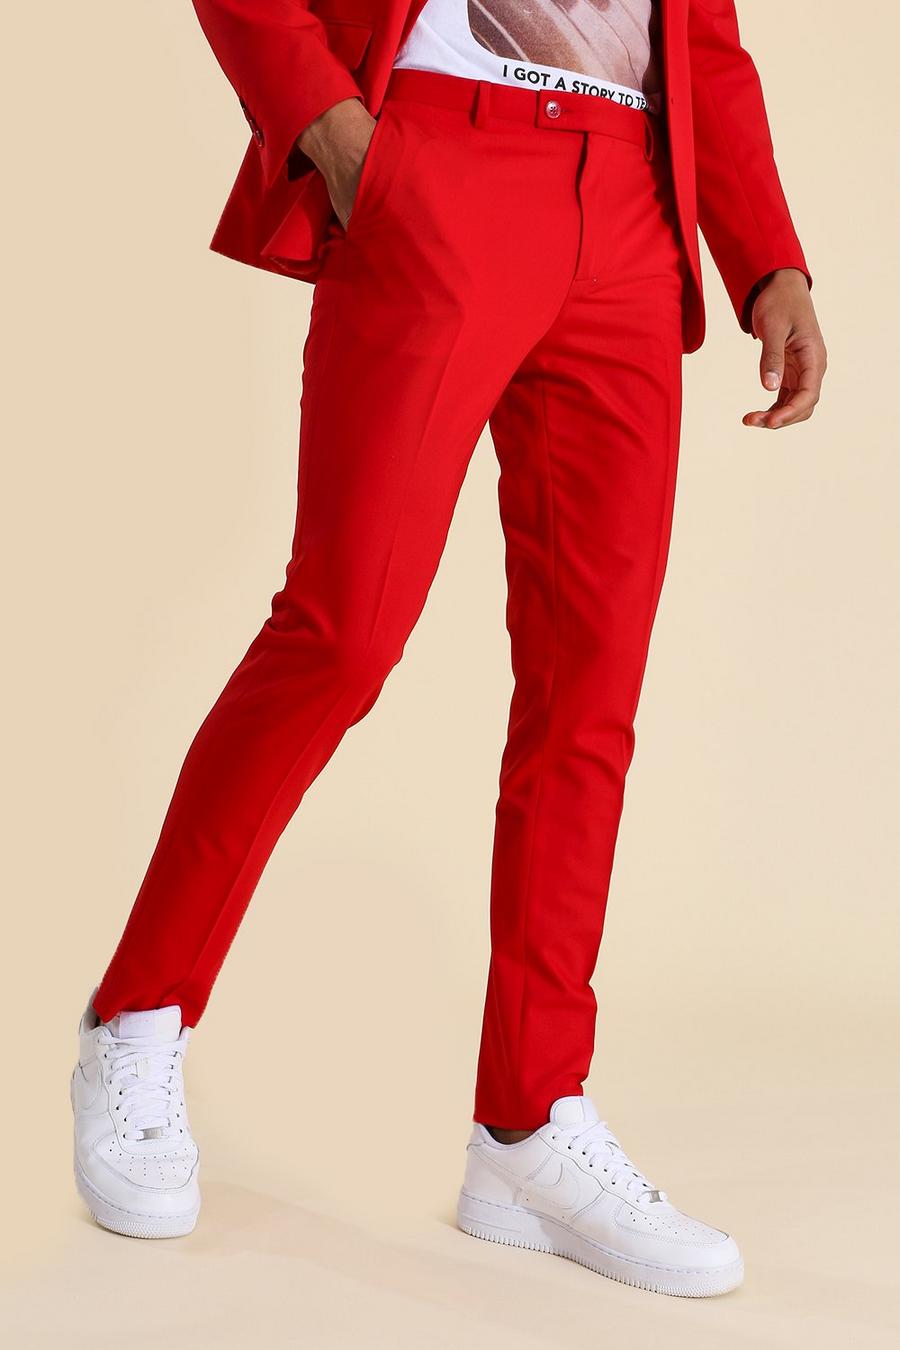 Pantaloni completo Skinny Fit rossi, Rosso